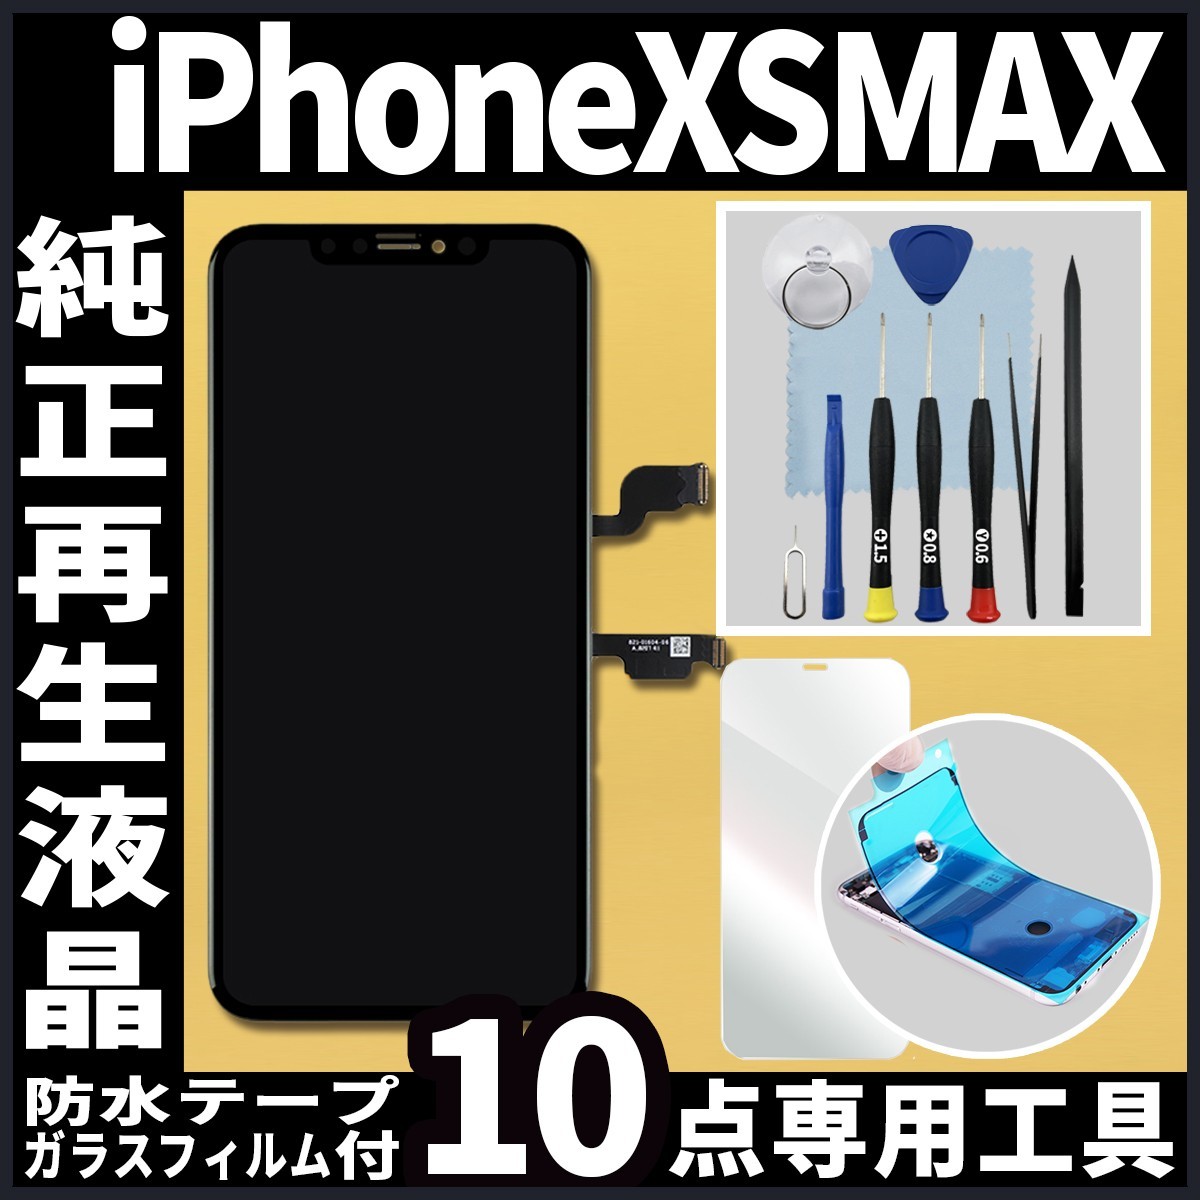 iPhoneXSMAX フロントパネル 純正再生品 防水テープ 純正液晶 修理工具 再生 リペア 画面割れ 液晶 修理 iphone ガラス割れ ディスプレイ_画像1